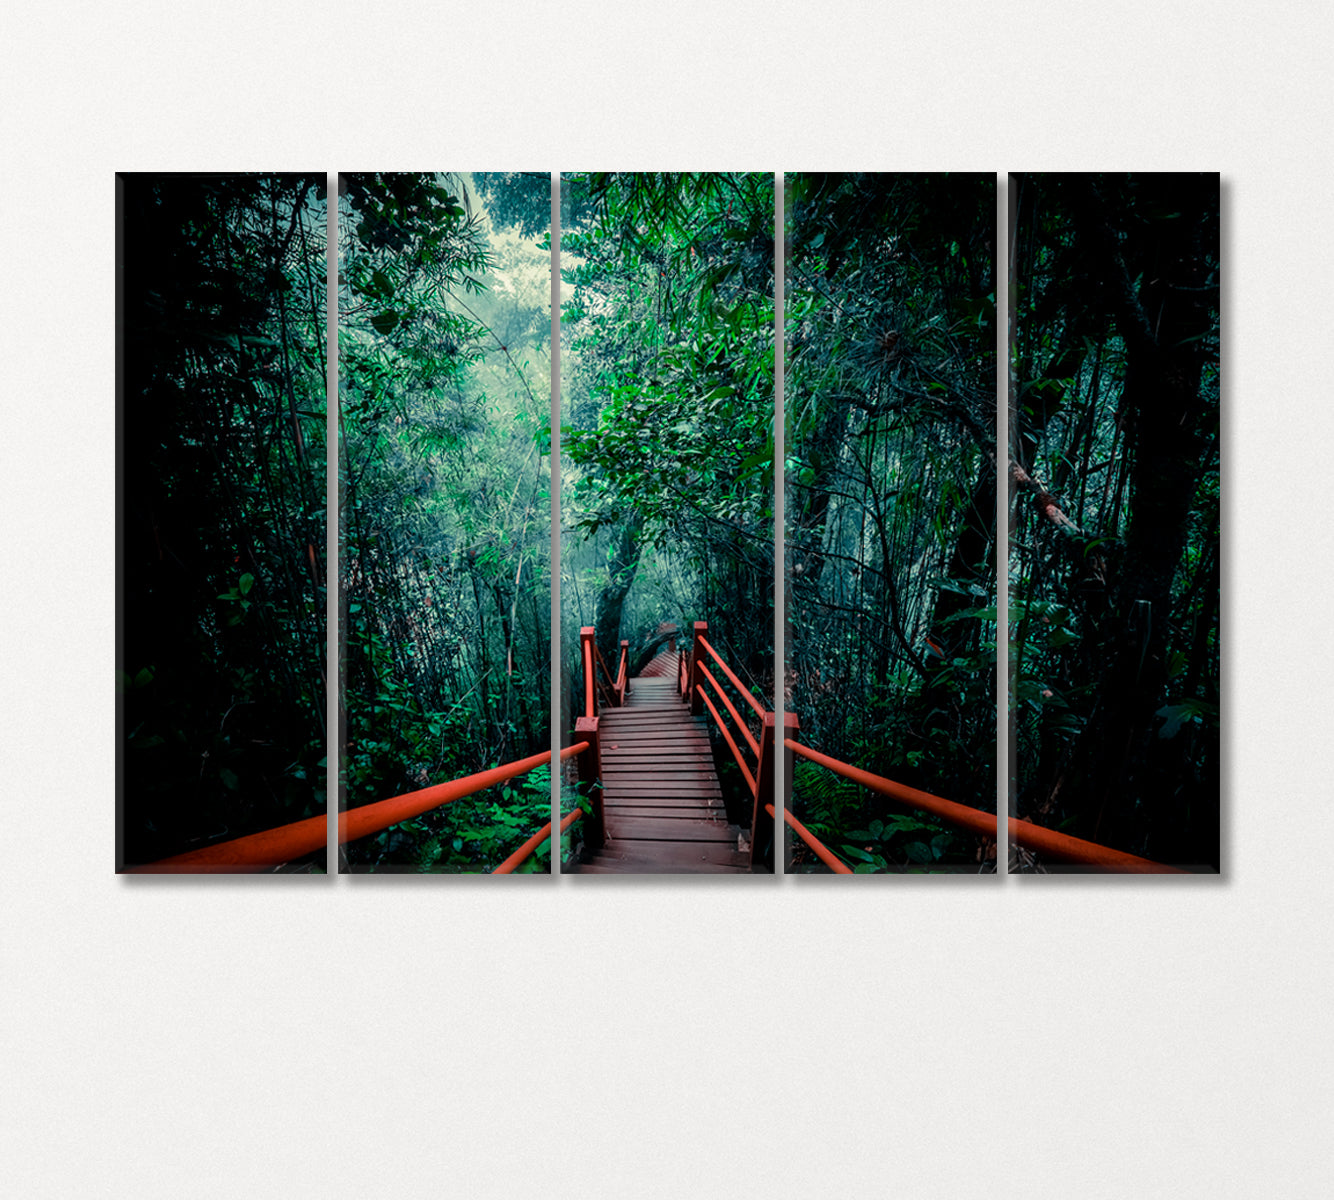 Wooden Bridge in Mystical Foggy Forest Canvas Print-Canvas Print-CetArt-5 Panels-36x24 inches-CetArt